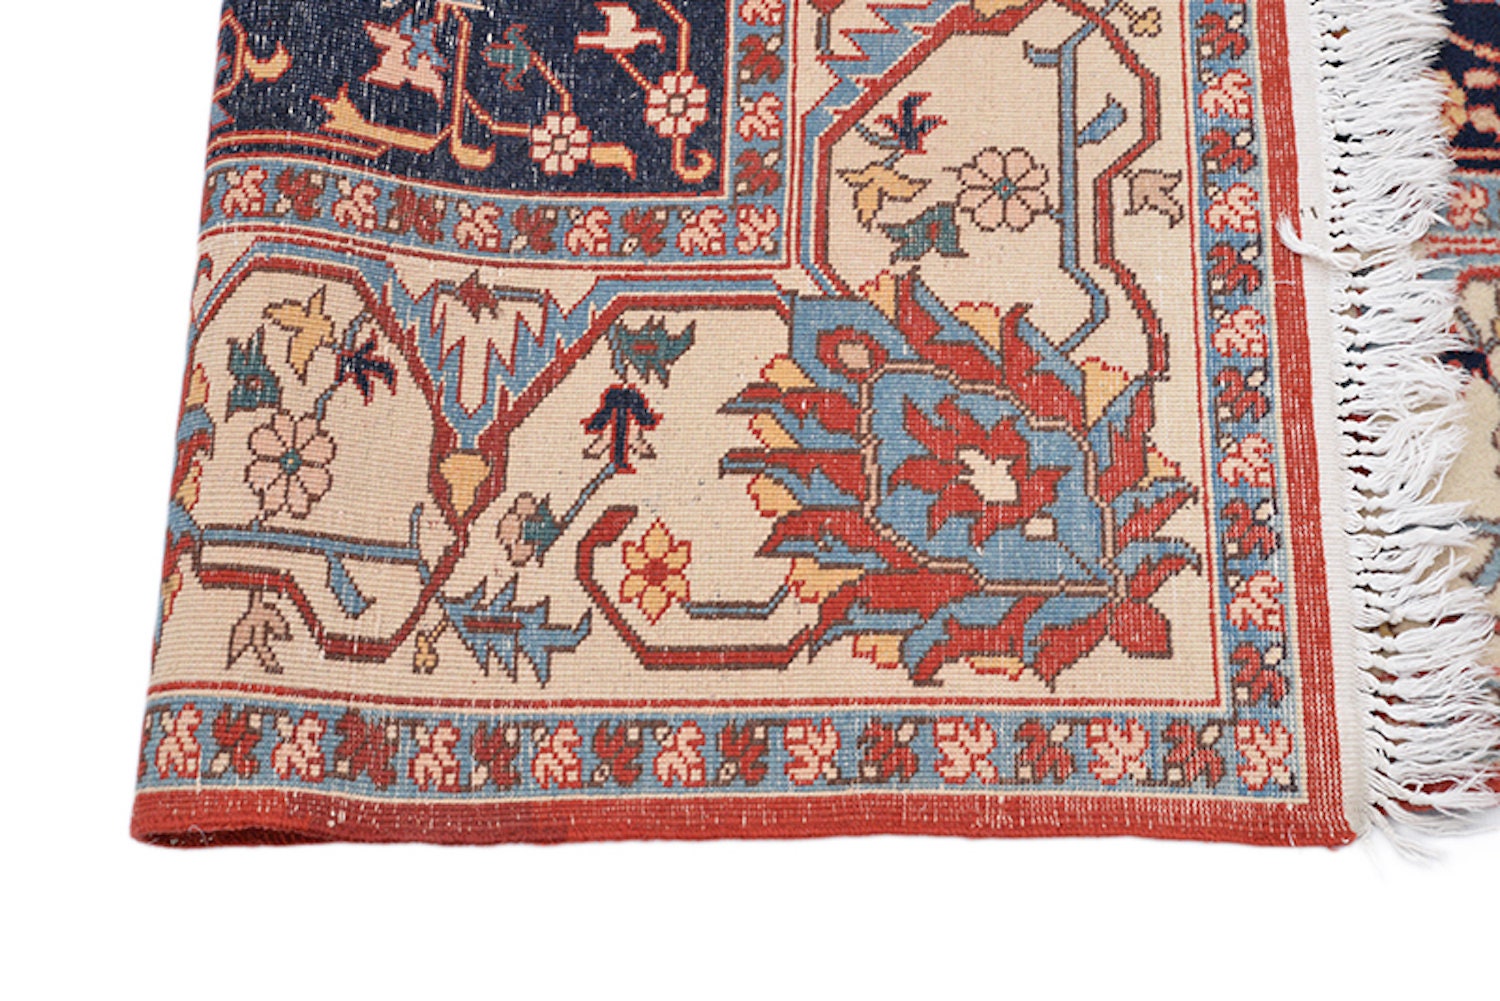 Red Navy Medallion Rug, Antique Turkish Kazak Rug, 8 x 10 Feet, Oriental Traditional Rug, Vibrant Hand Knotted Area Rug